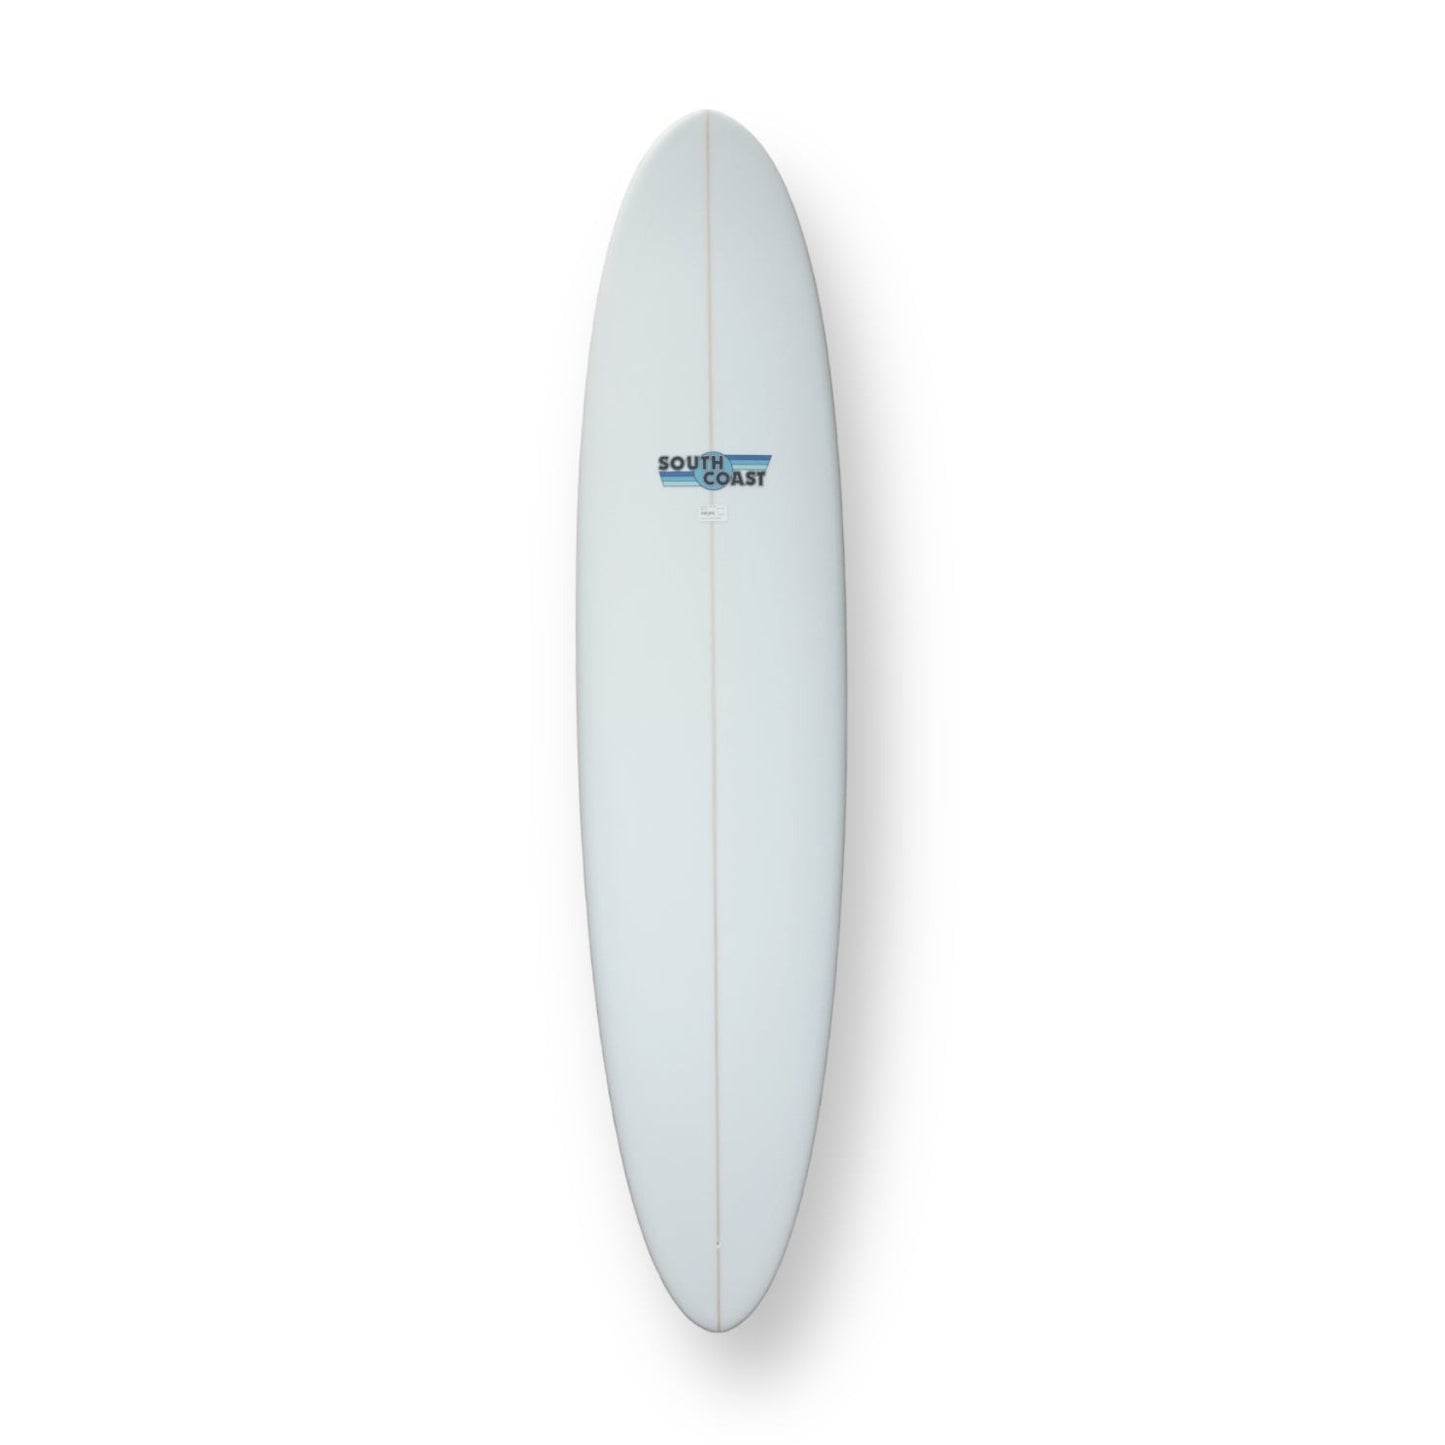 South Coast Speed Egg 7'9" Surfboard